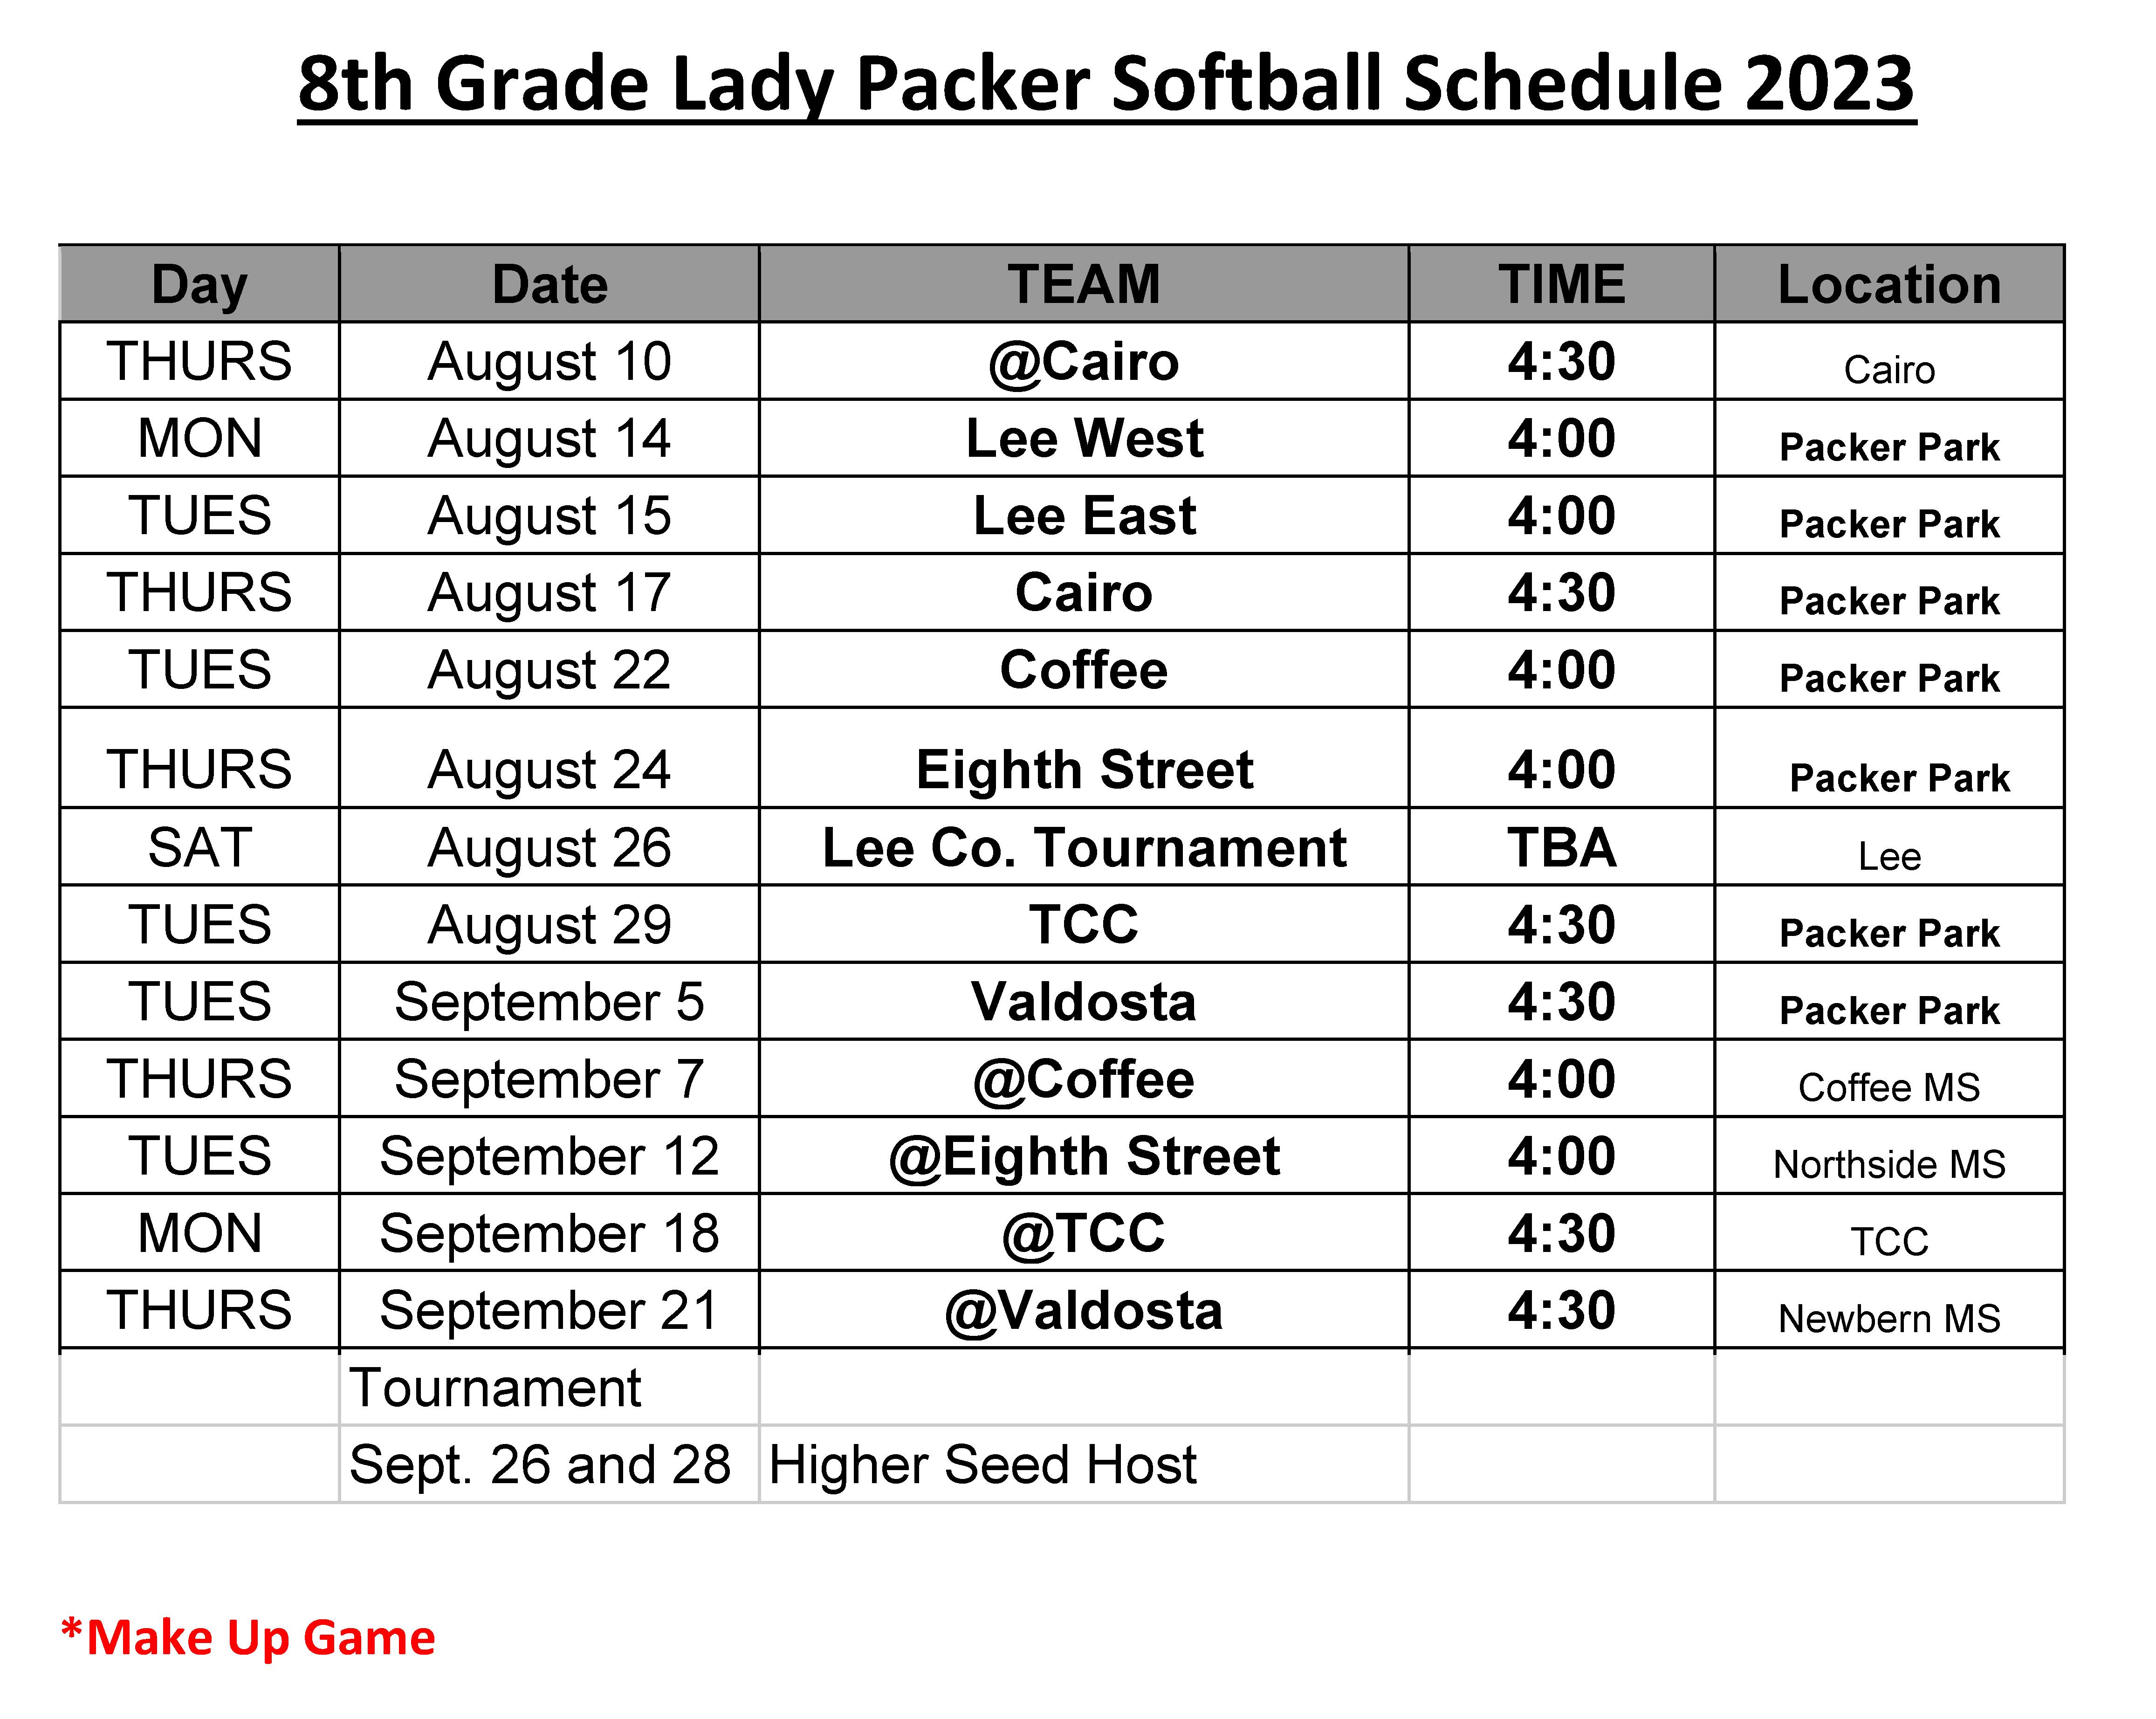 8th grade 2023 Softball Schedule